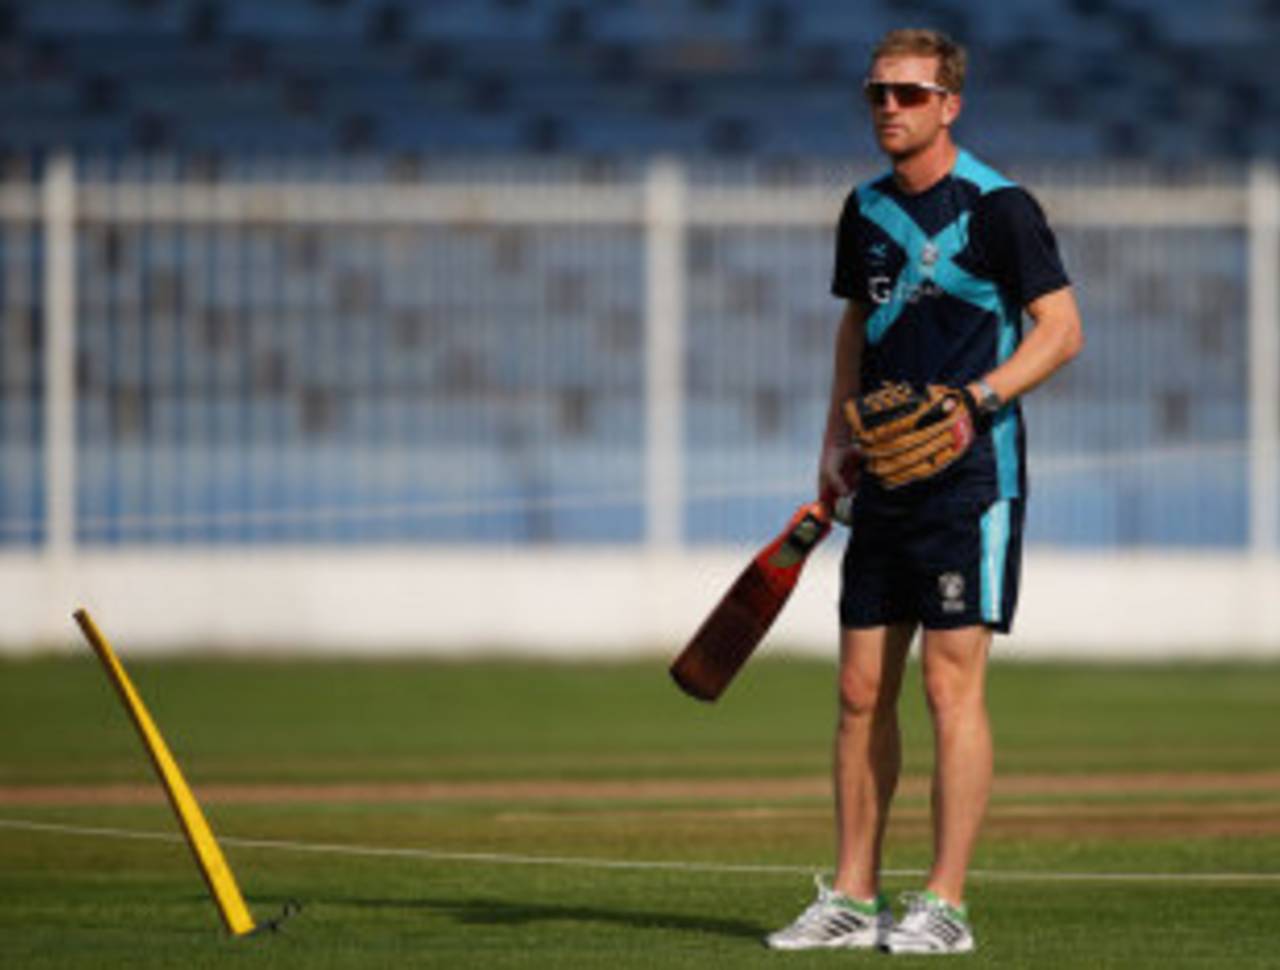 Scotland coach Paul Collingwood runs through some drills, Bermuda v Scotland, ICC World Twenty20 Qualifier, Sharjah, November 15, 2013